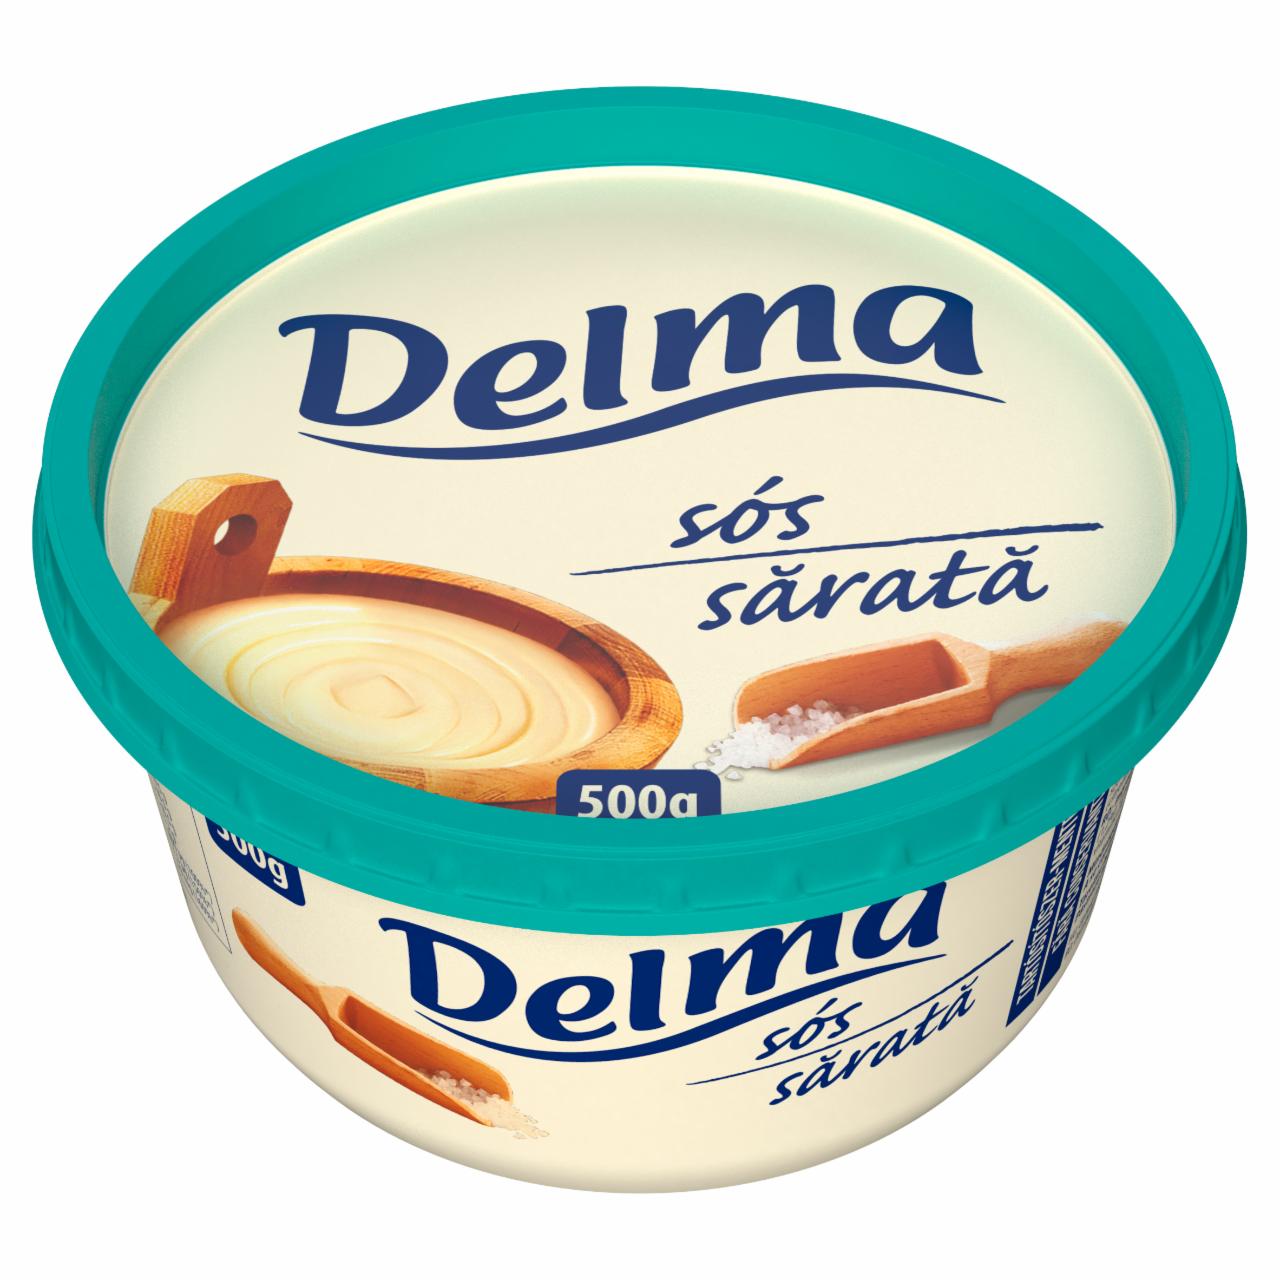 Képek - Delma sós light margarin 500 g